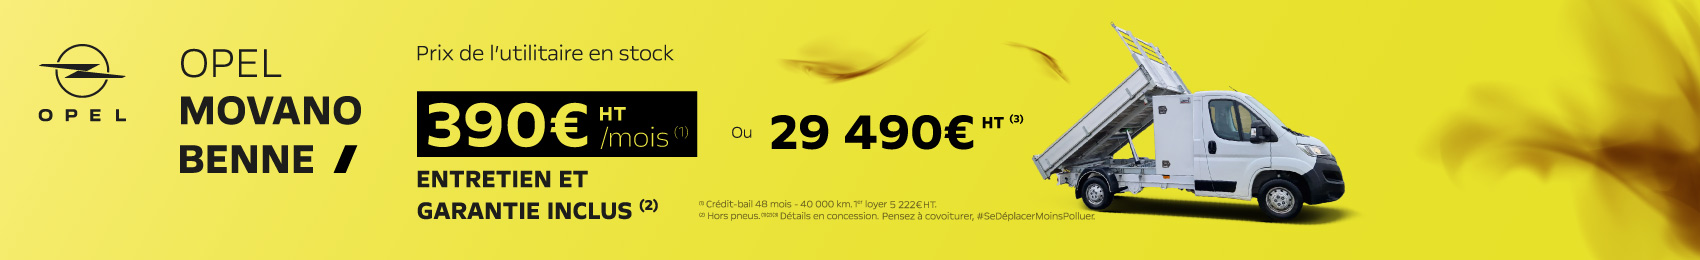 Bannière desktop Opel Movano Benne